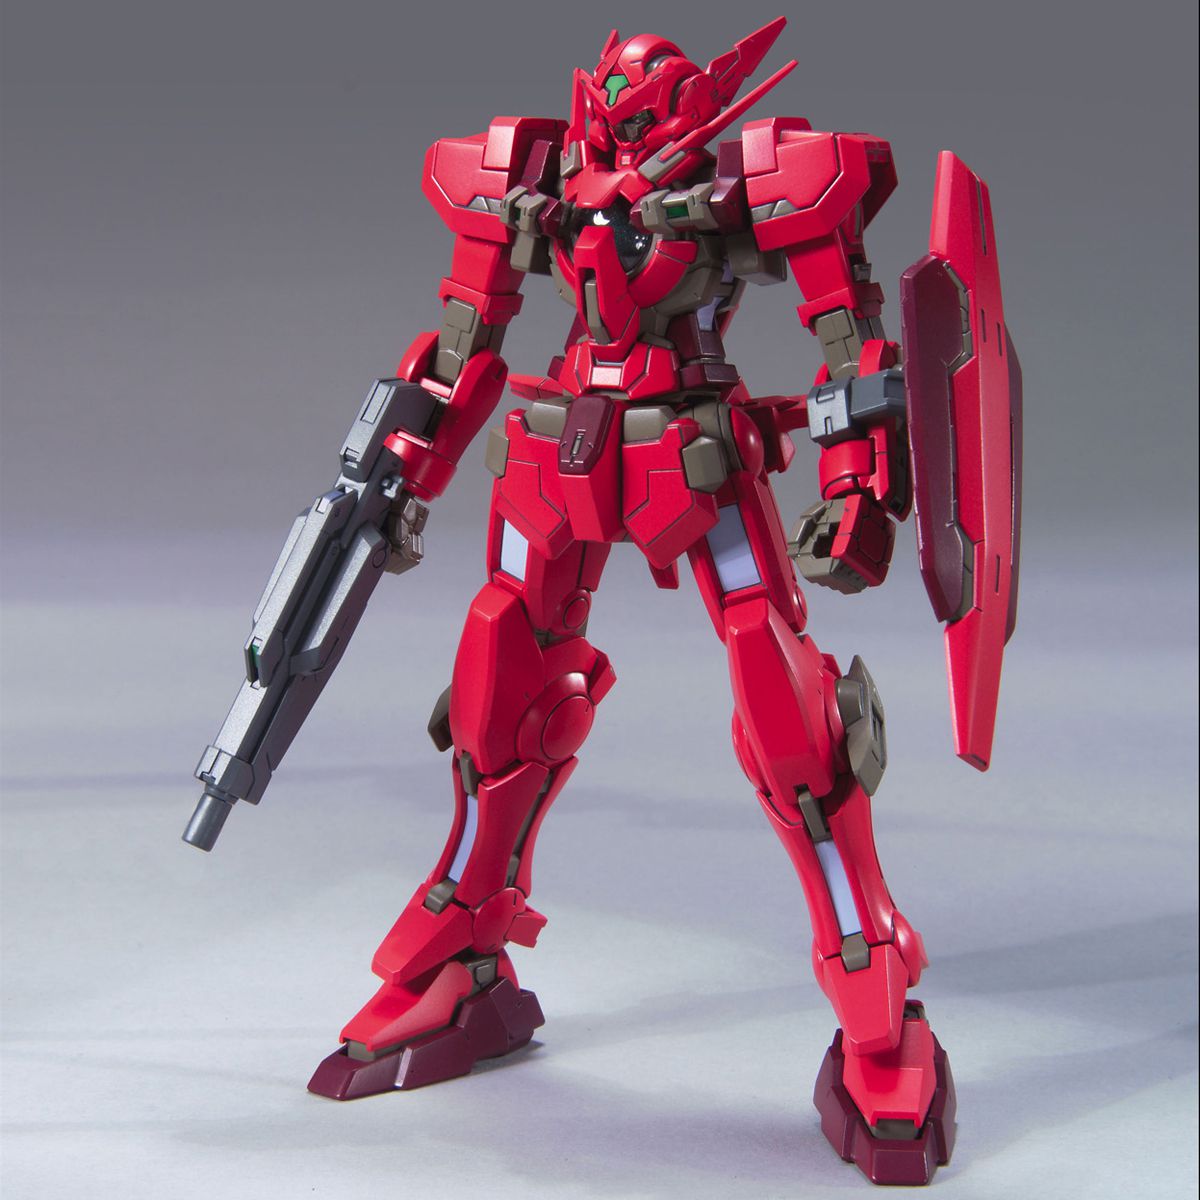 HG 1/144 Gundam Astraea Type F - High Grade Mobile Suit Gundam 00F | Glacier Hobbies